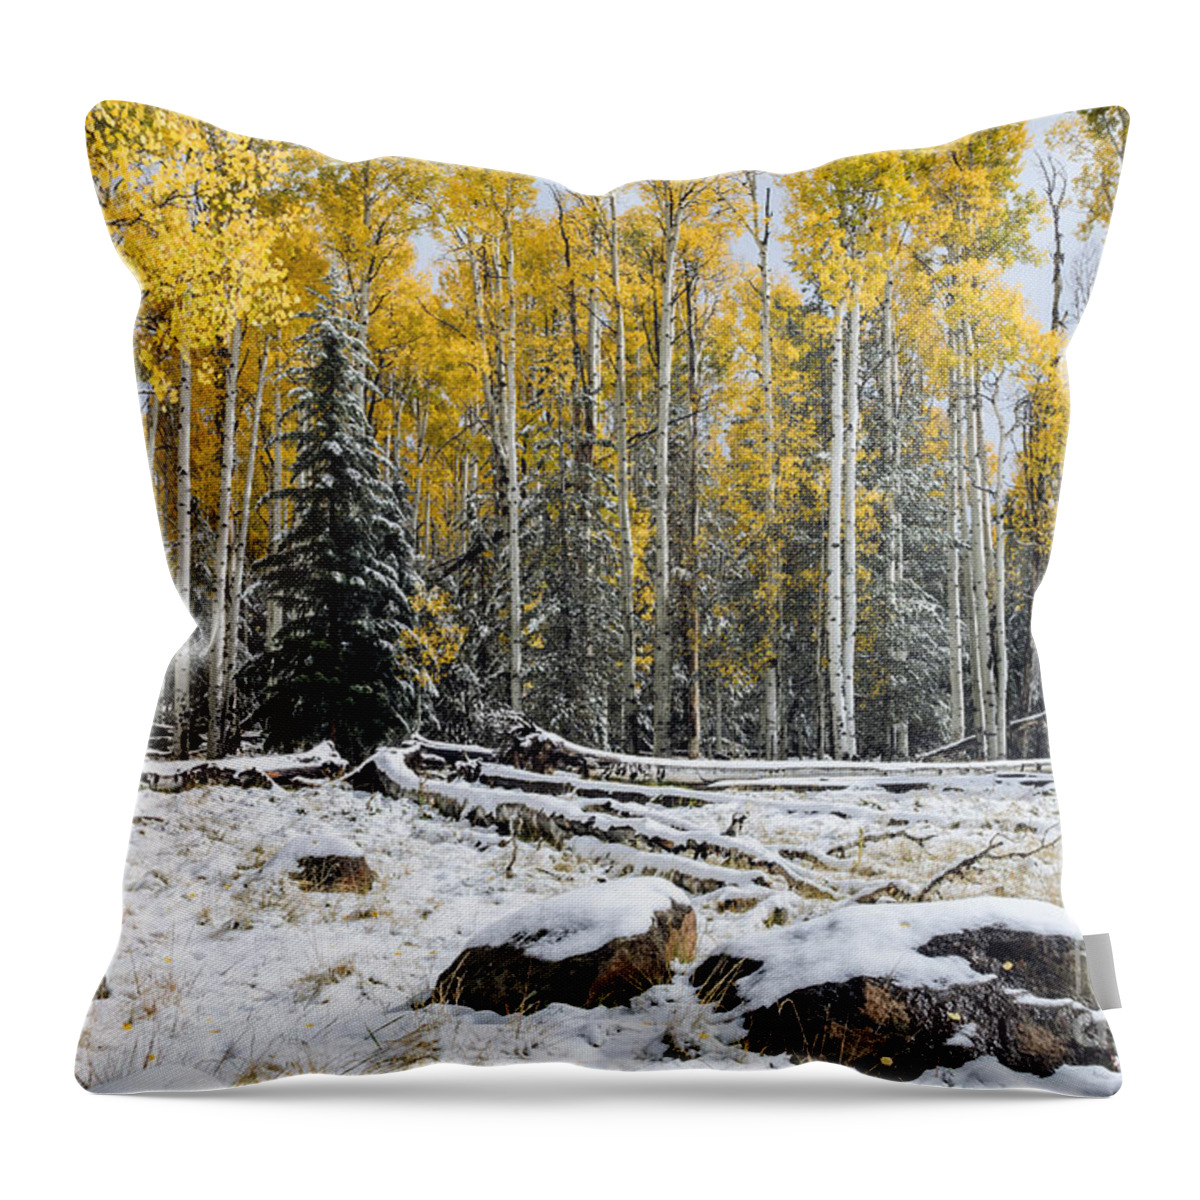 Arizona Throw Pillow featuring the photograph Between Seasons by Tamara Becker